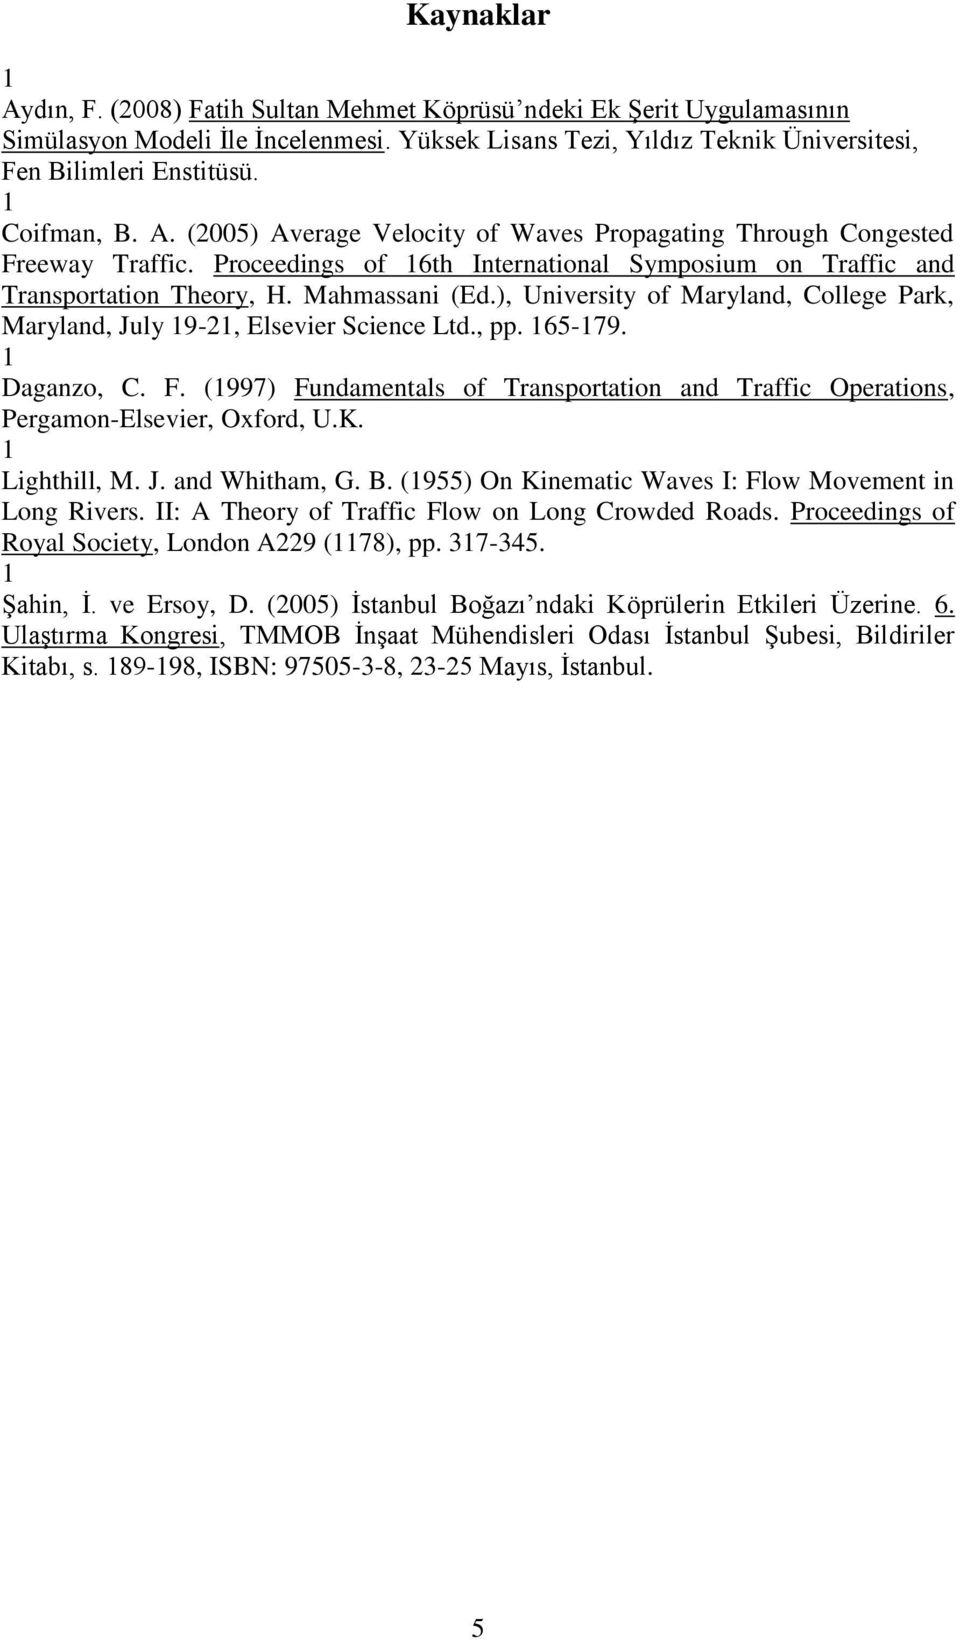 ), University of Maryland, College Park, Maryland, July 9-, Elsevier Science Ltd., pp. 65-79. Daganzo, C. F. (997) Fundamentals of Transportation and Traffic Operations, Pergamon-Elsevier, Oxford, U.